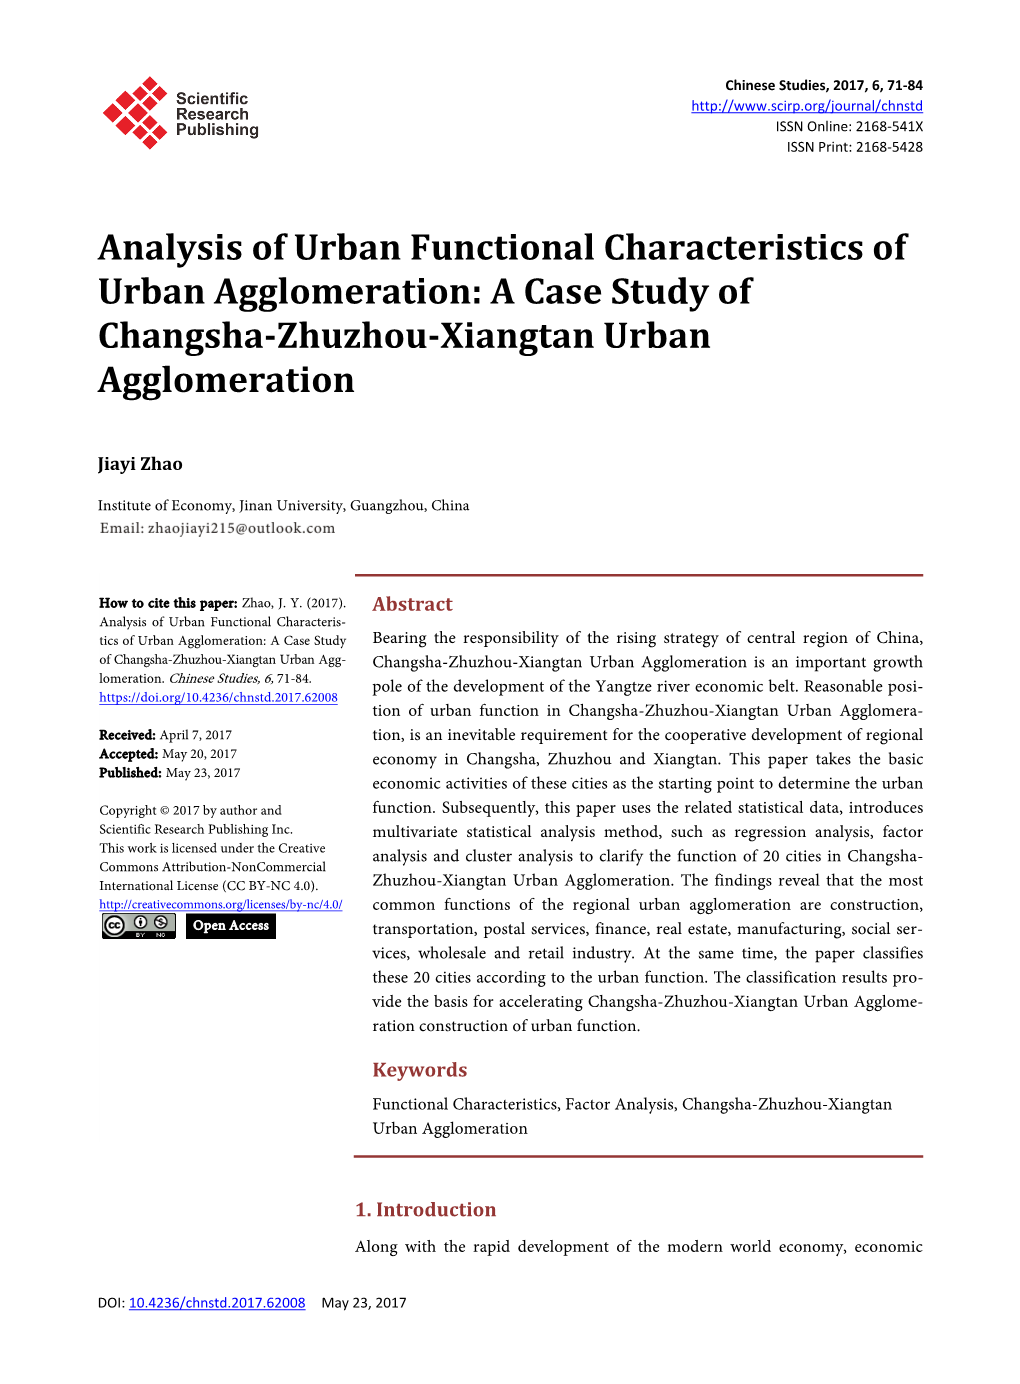 Analysis of Urban Functional Characteristics of Urban Agglomeration: a Case Study of Changsha-Zhuzhou-Xiangtan Urban Agglomeration